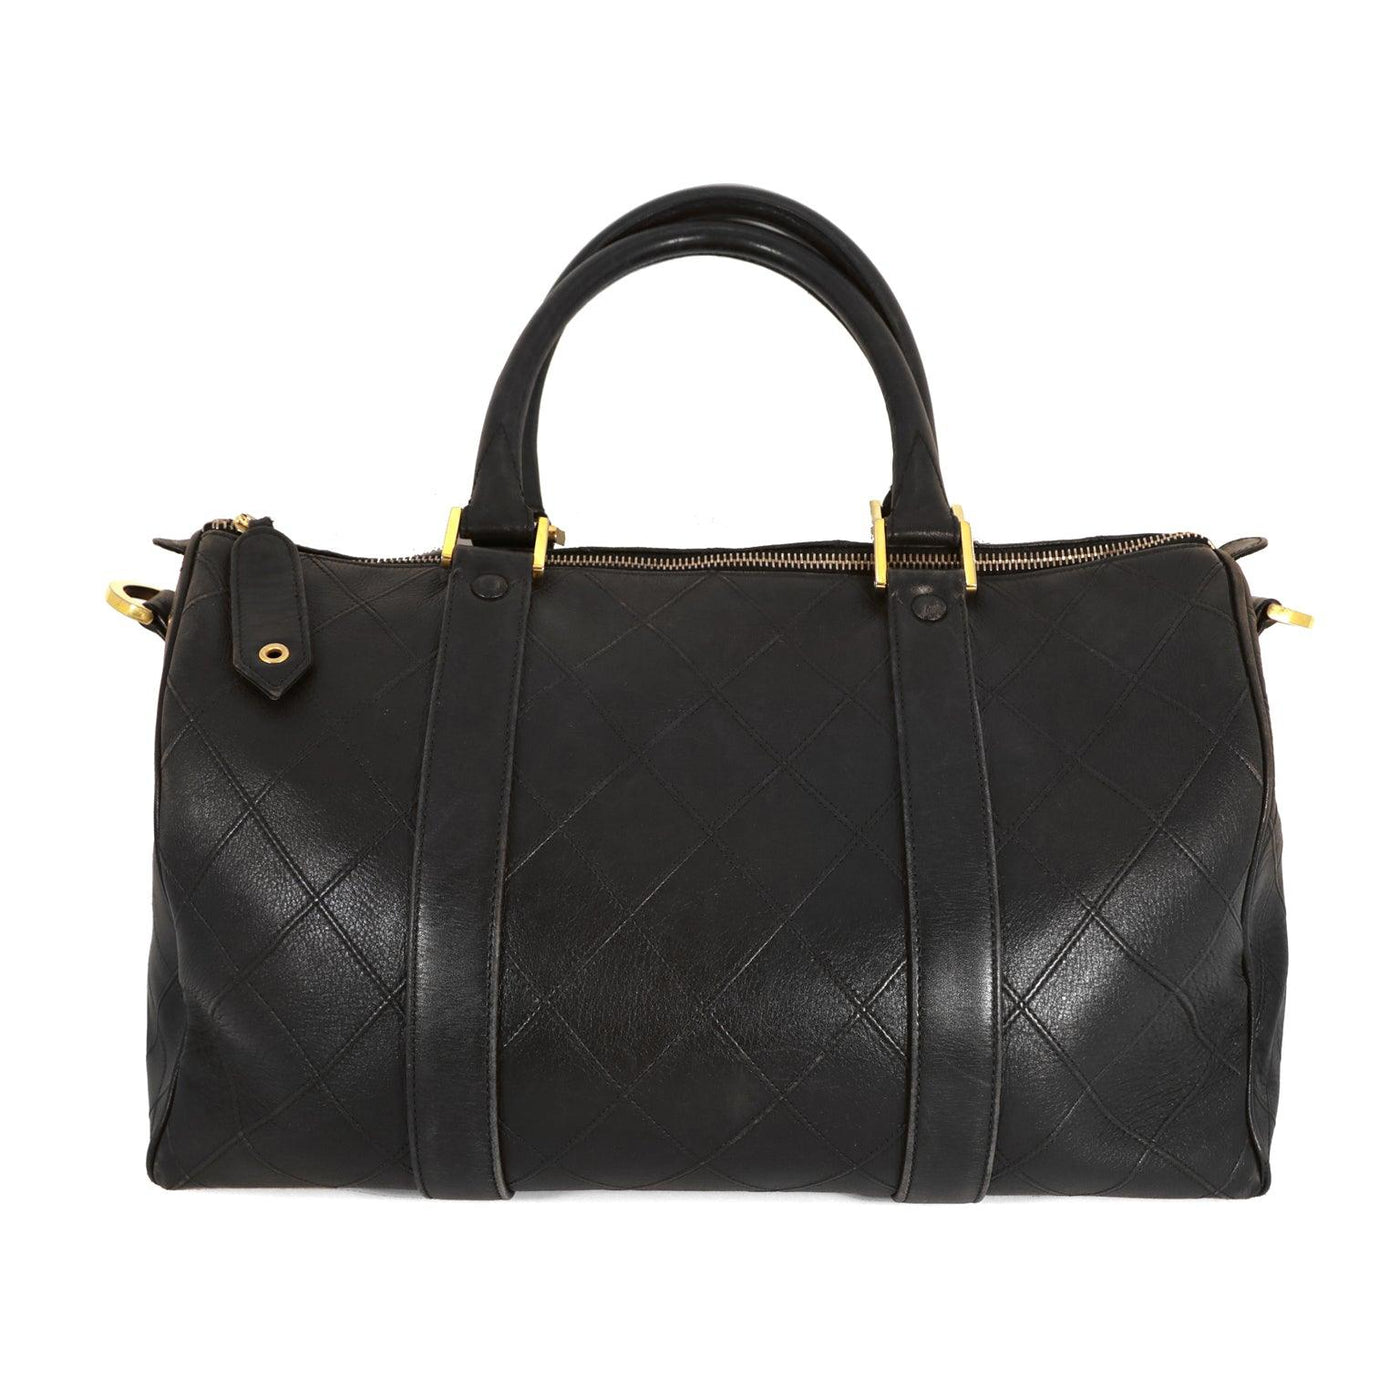 Chanel Black Leather Vintage Speedy Bag